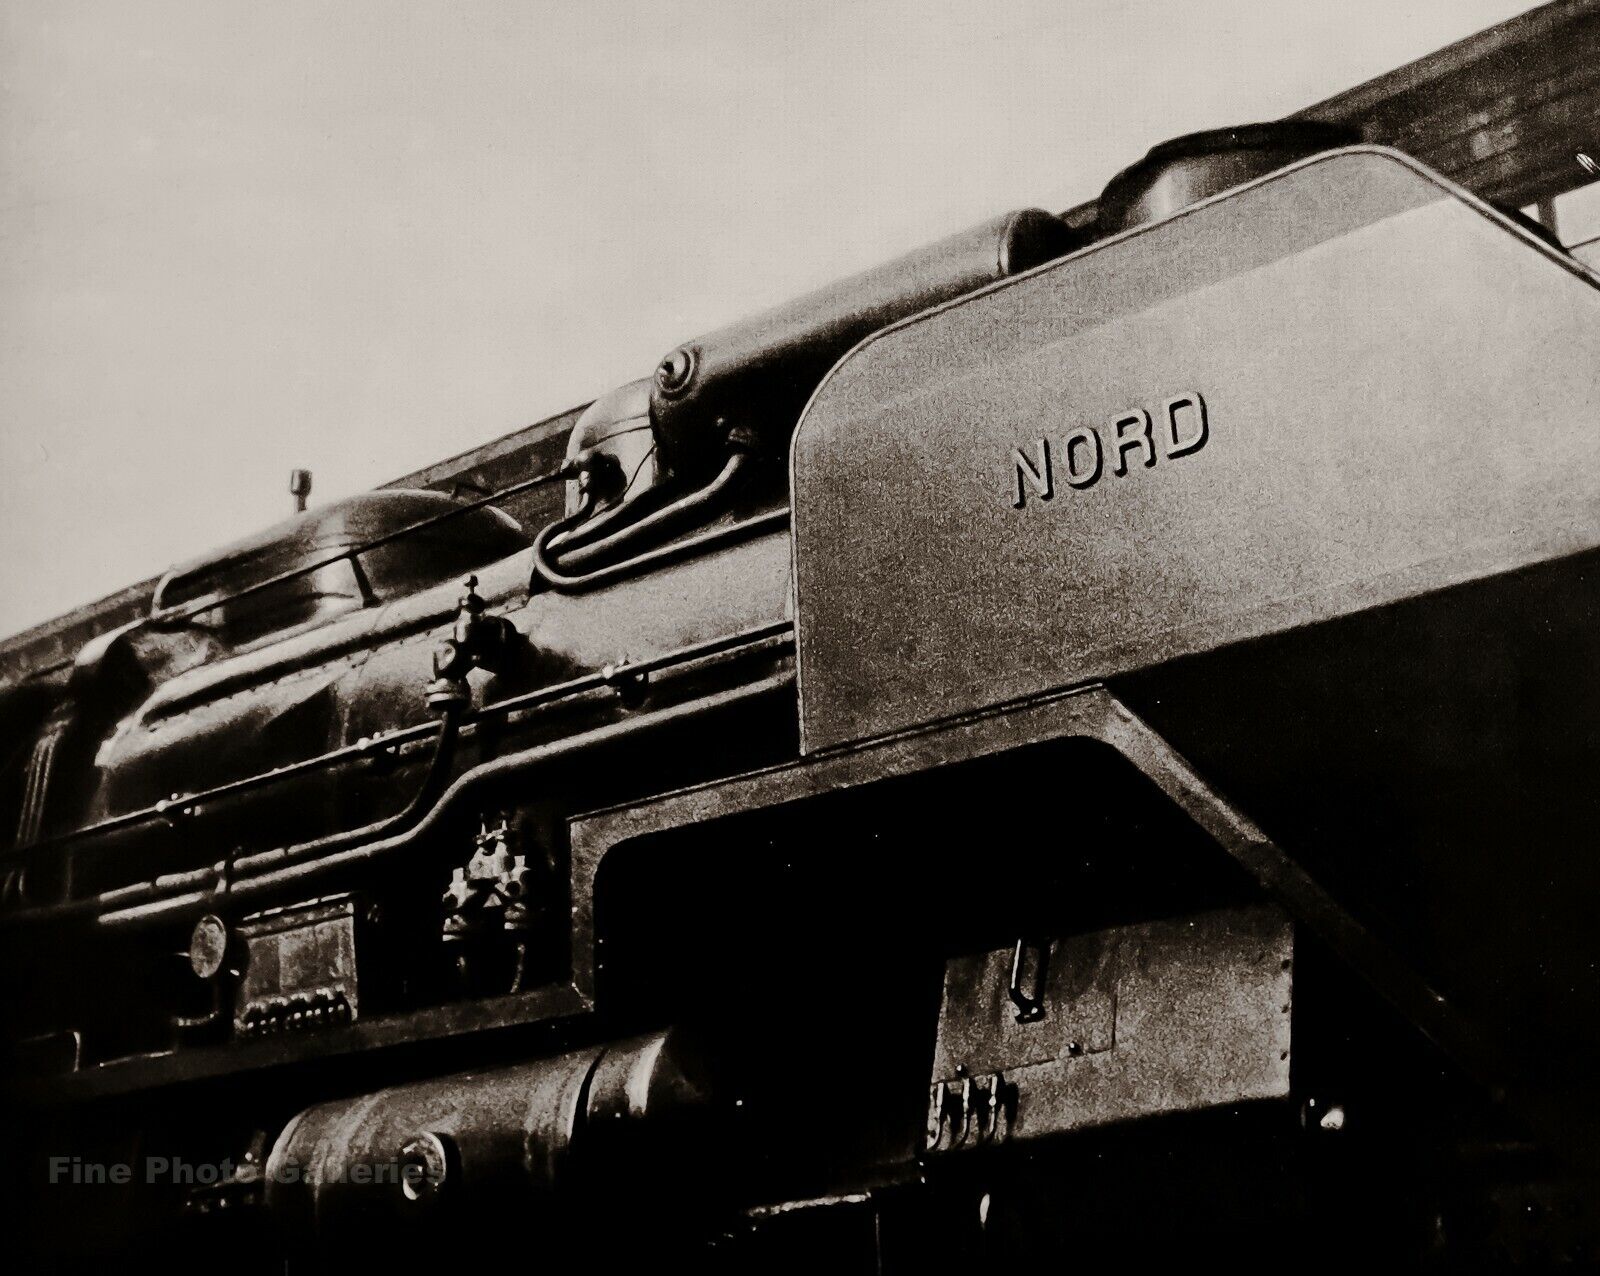 1932/75 MAN RAY Vintage Train Locomotive Engine Industrial Photo Engraving Art